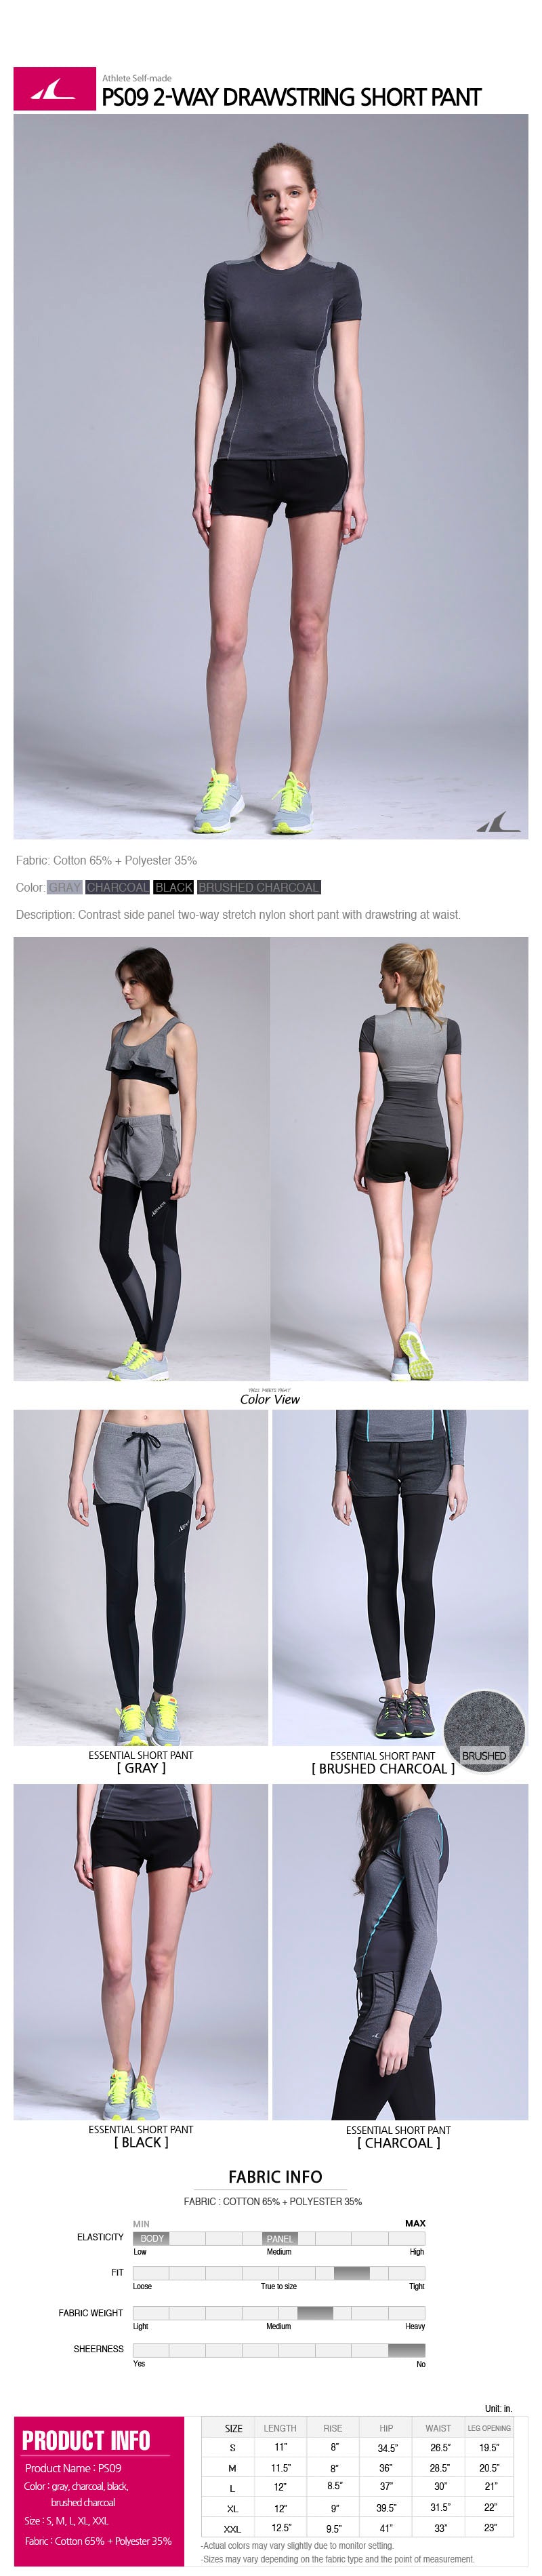 ATHLETE Women's 2-Way Drawstring Sweat Short, Style PS09